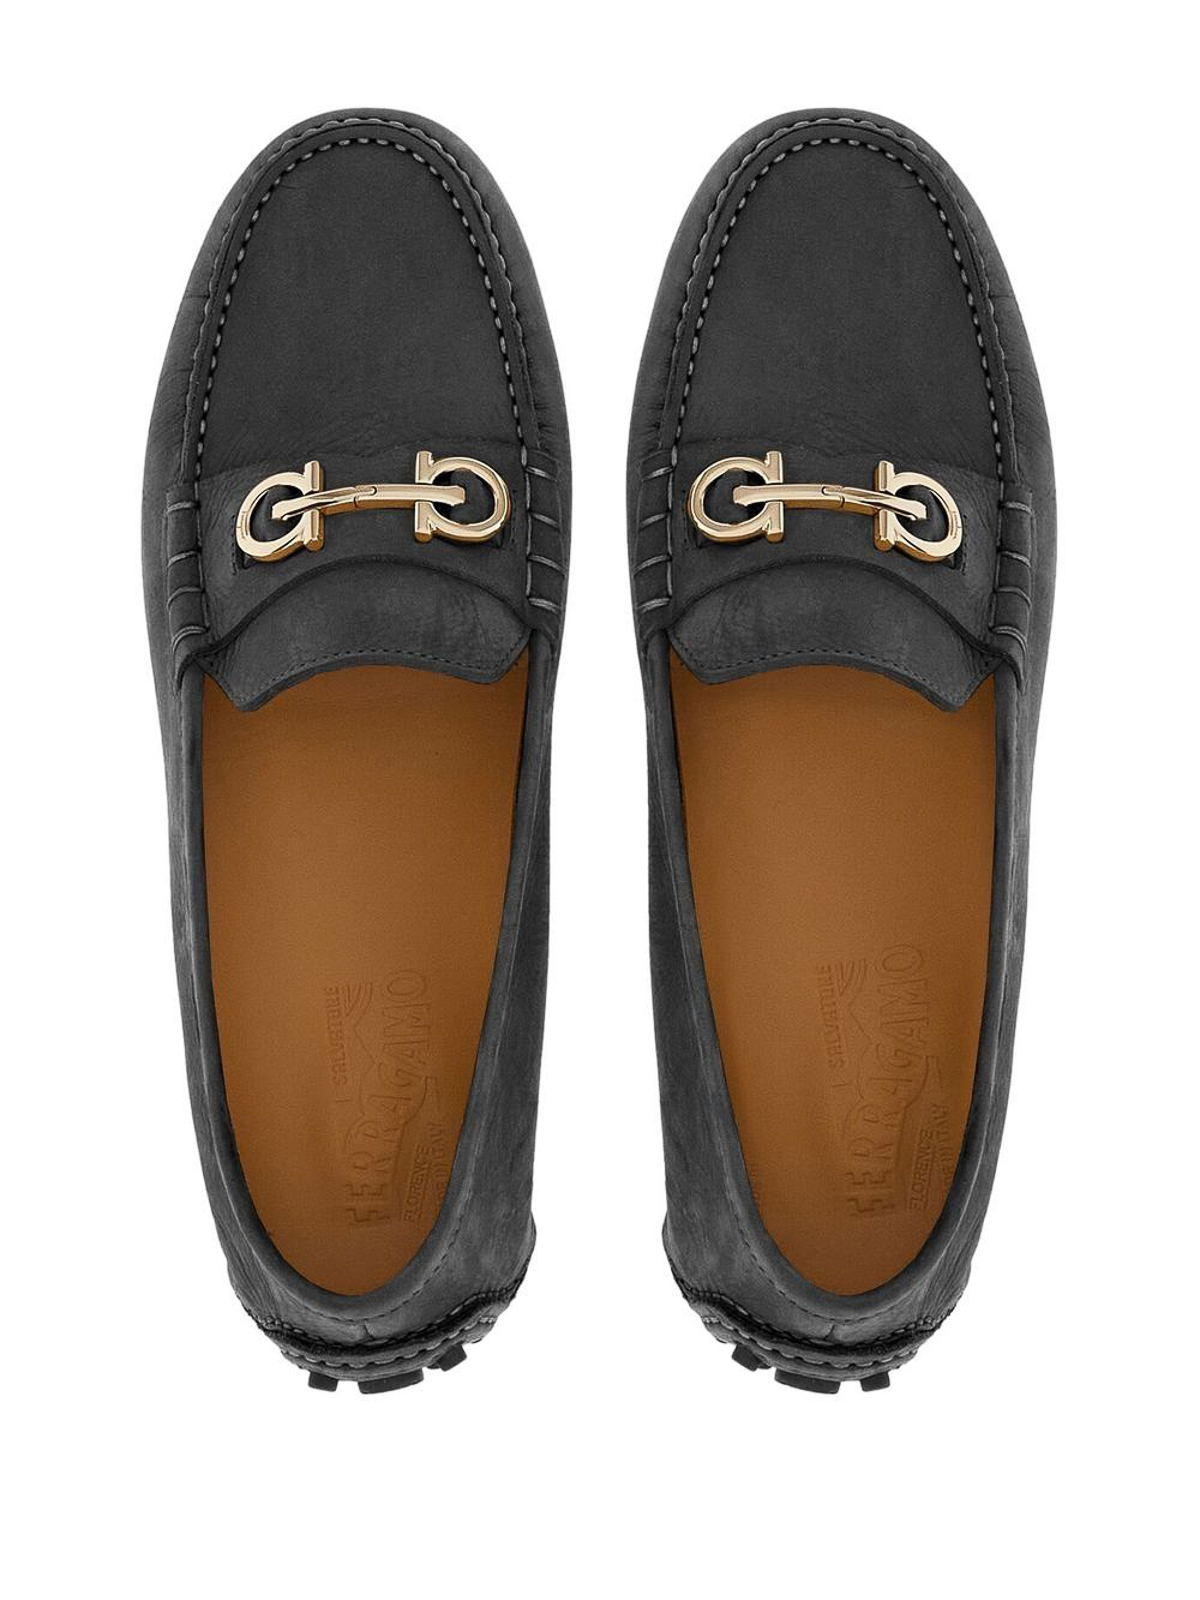 Gancini leather flats Salvatore Ferragamo Black size 8 US in